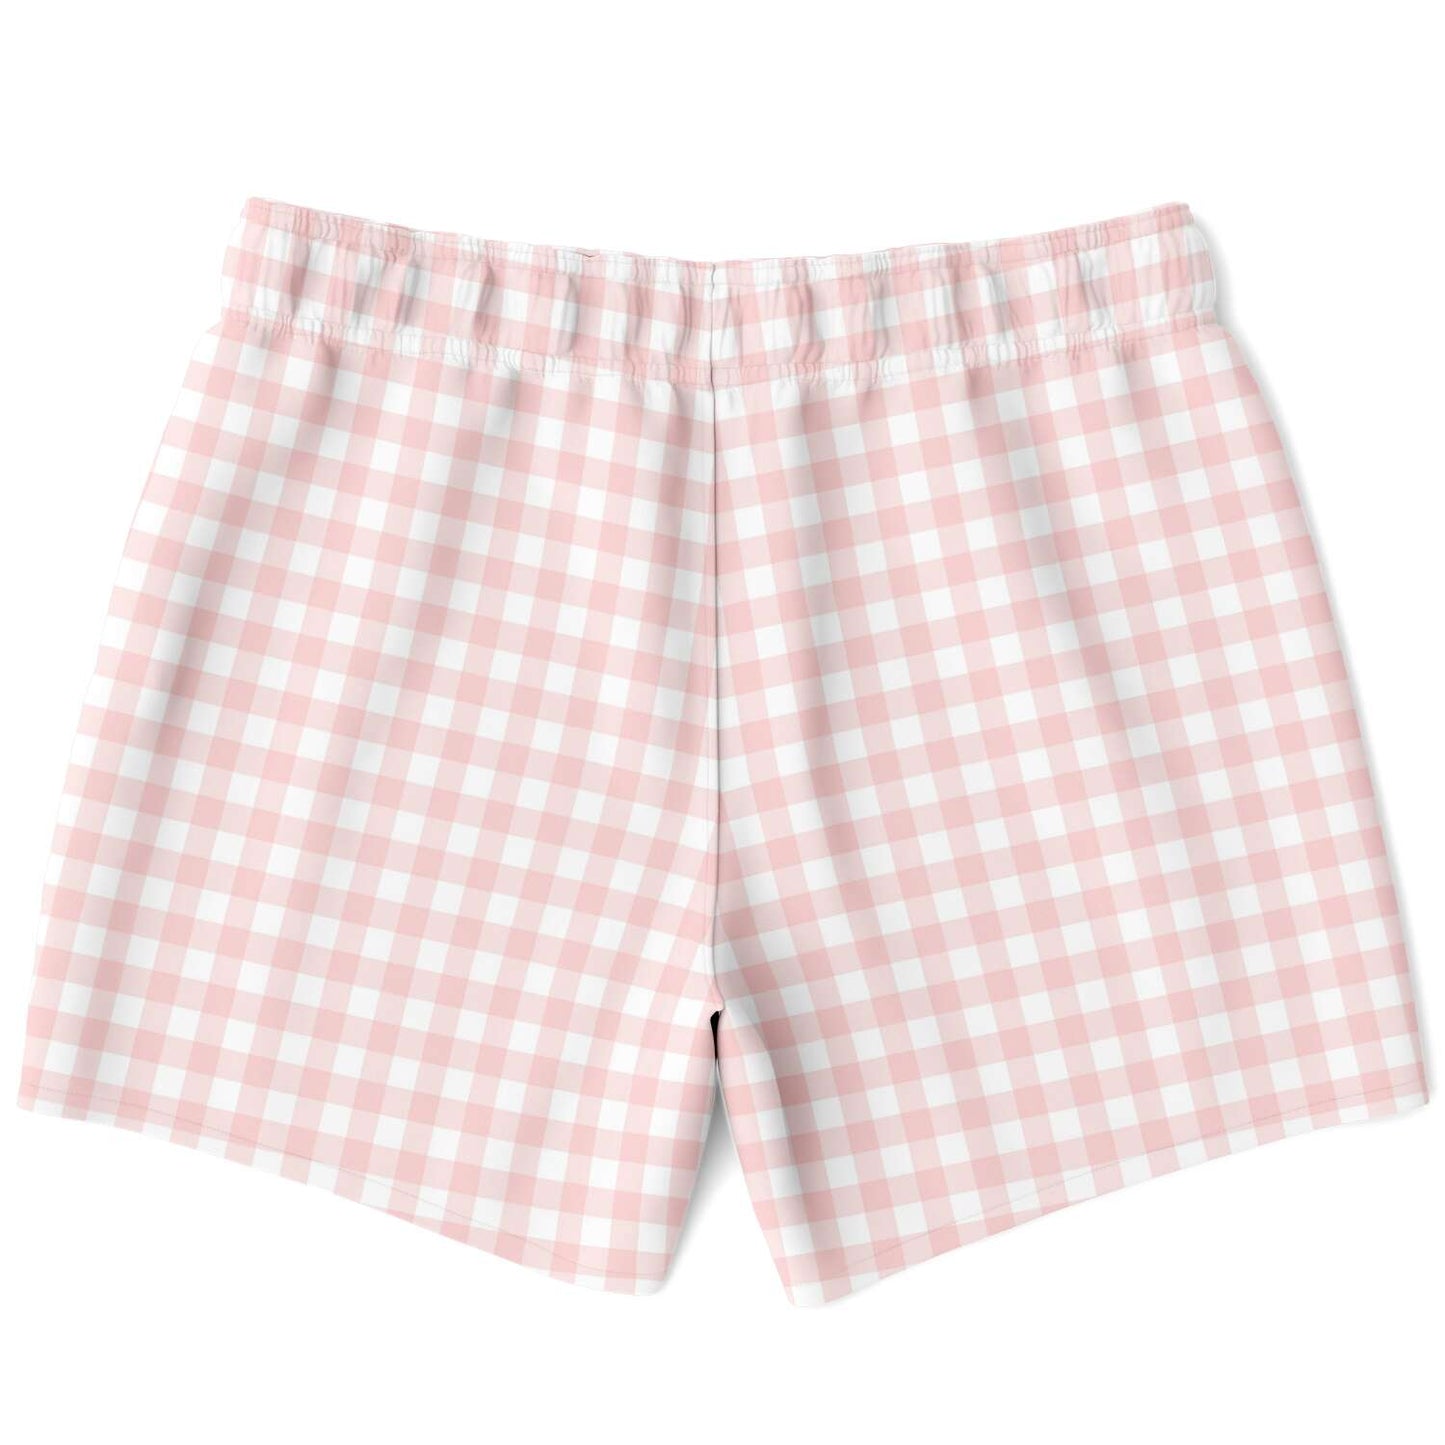 Pale Pink Gingham Check Swim Shorts